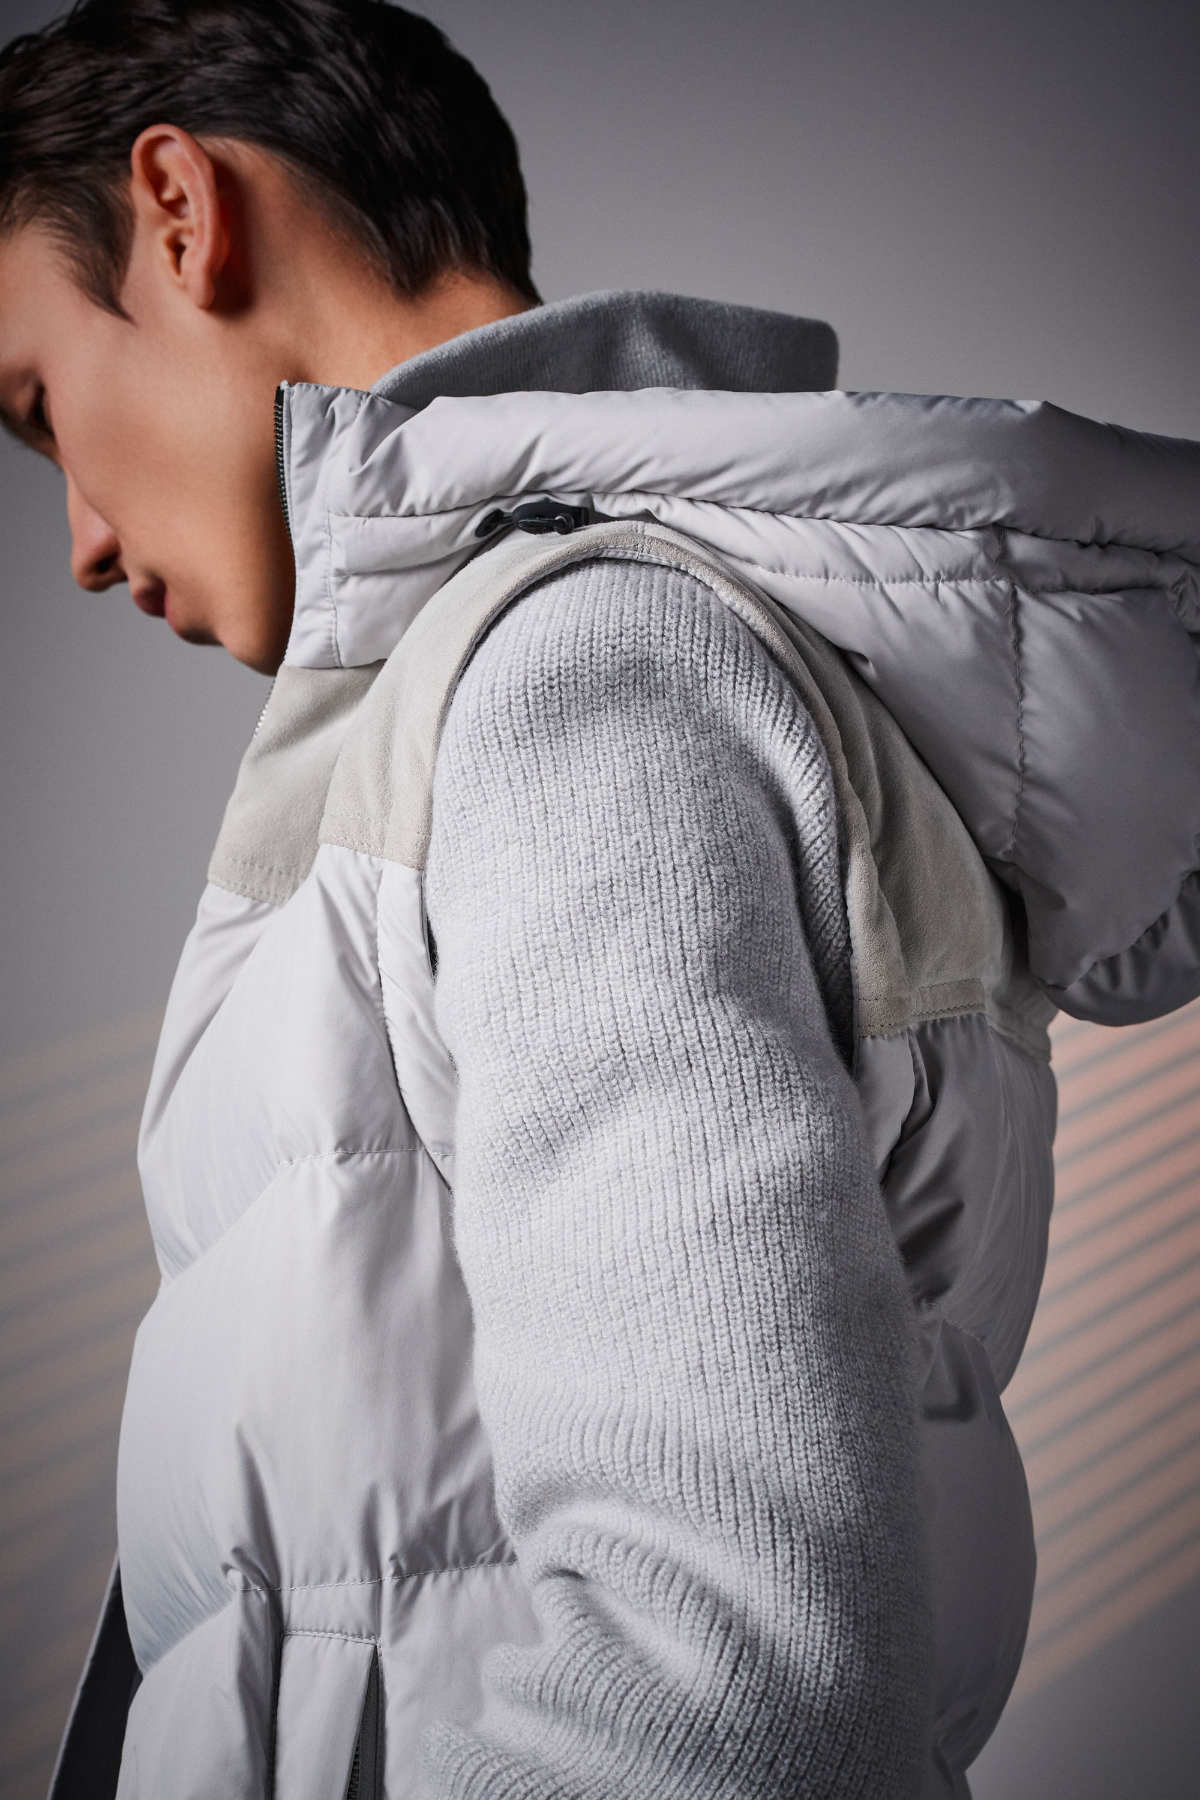 Kiton Presents Its Autumn-Winter 2022/23 Menswear Collection